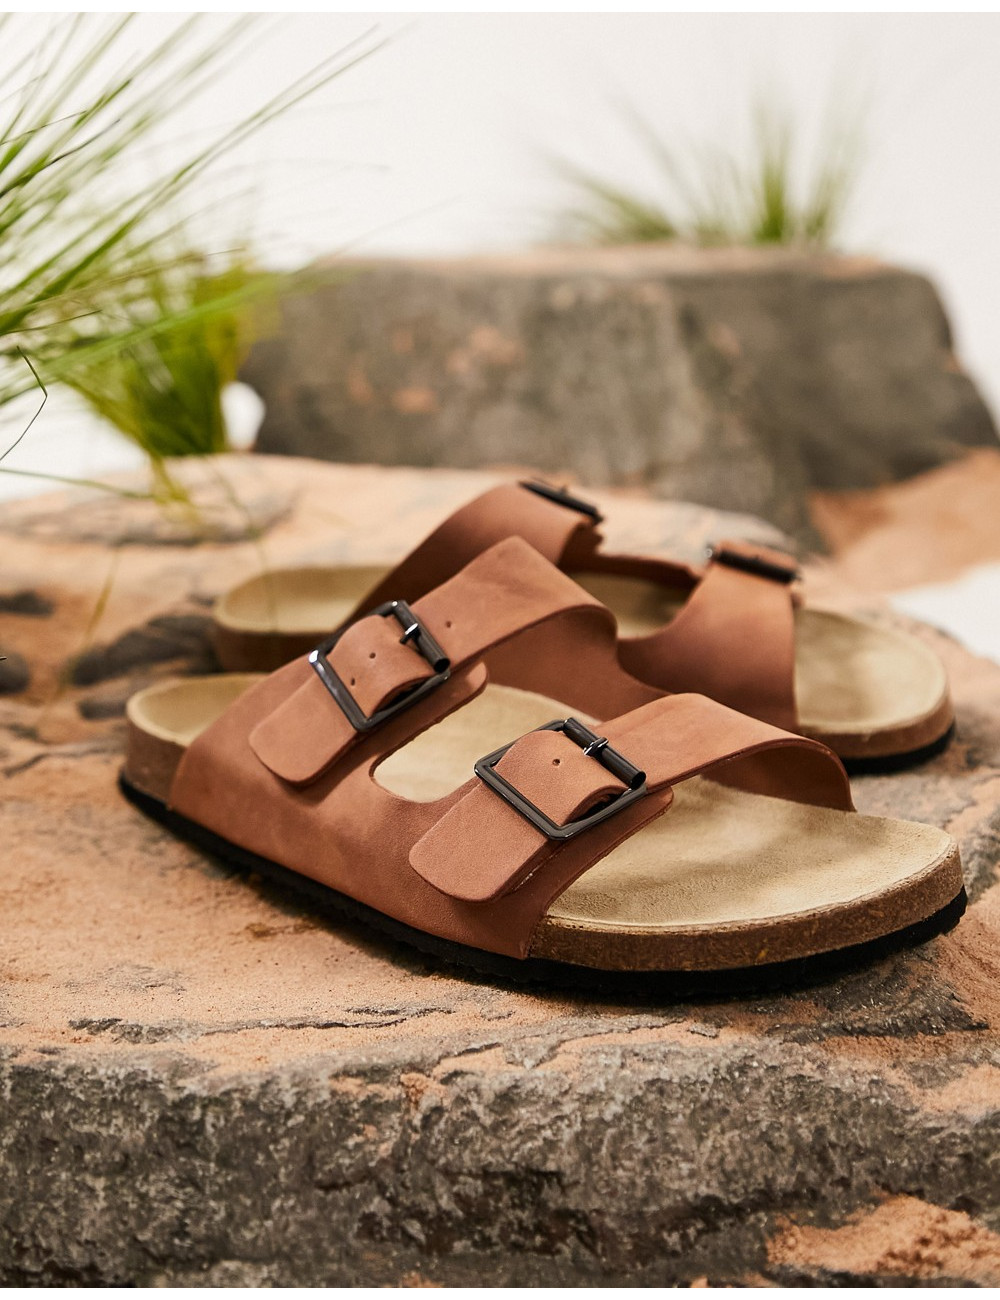 ASOS DESIGN sandals in tan